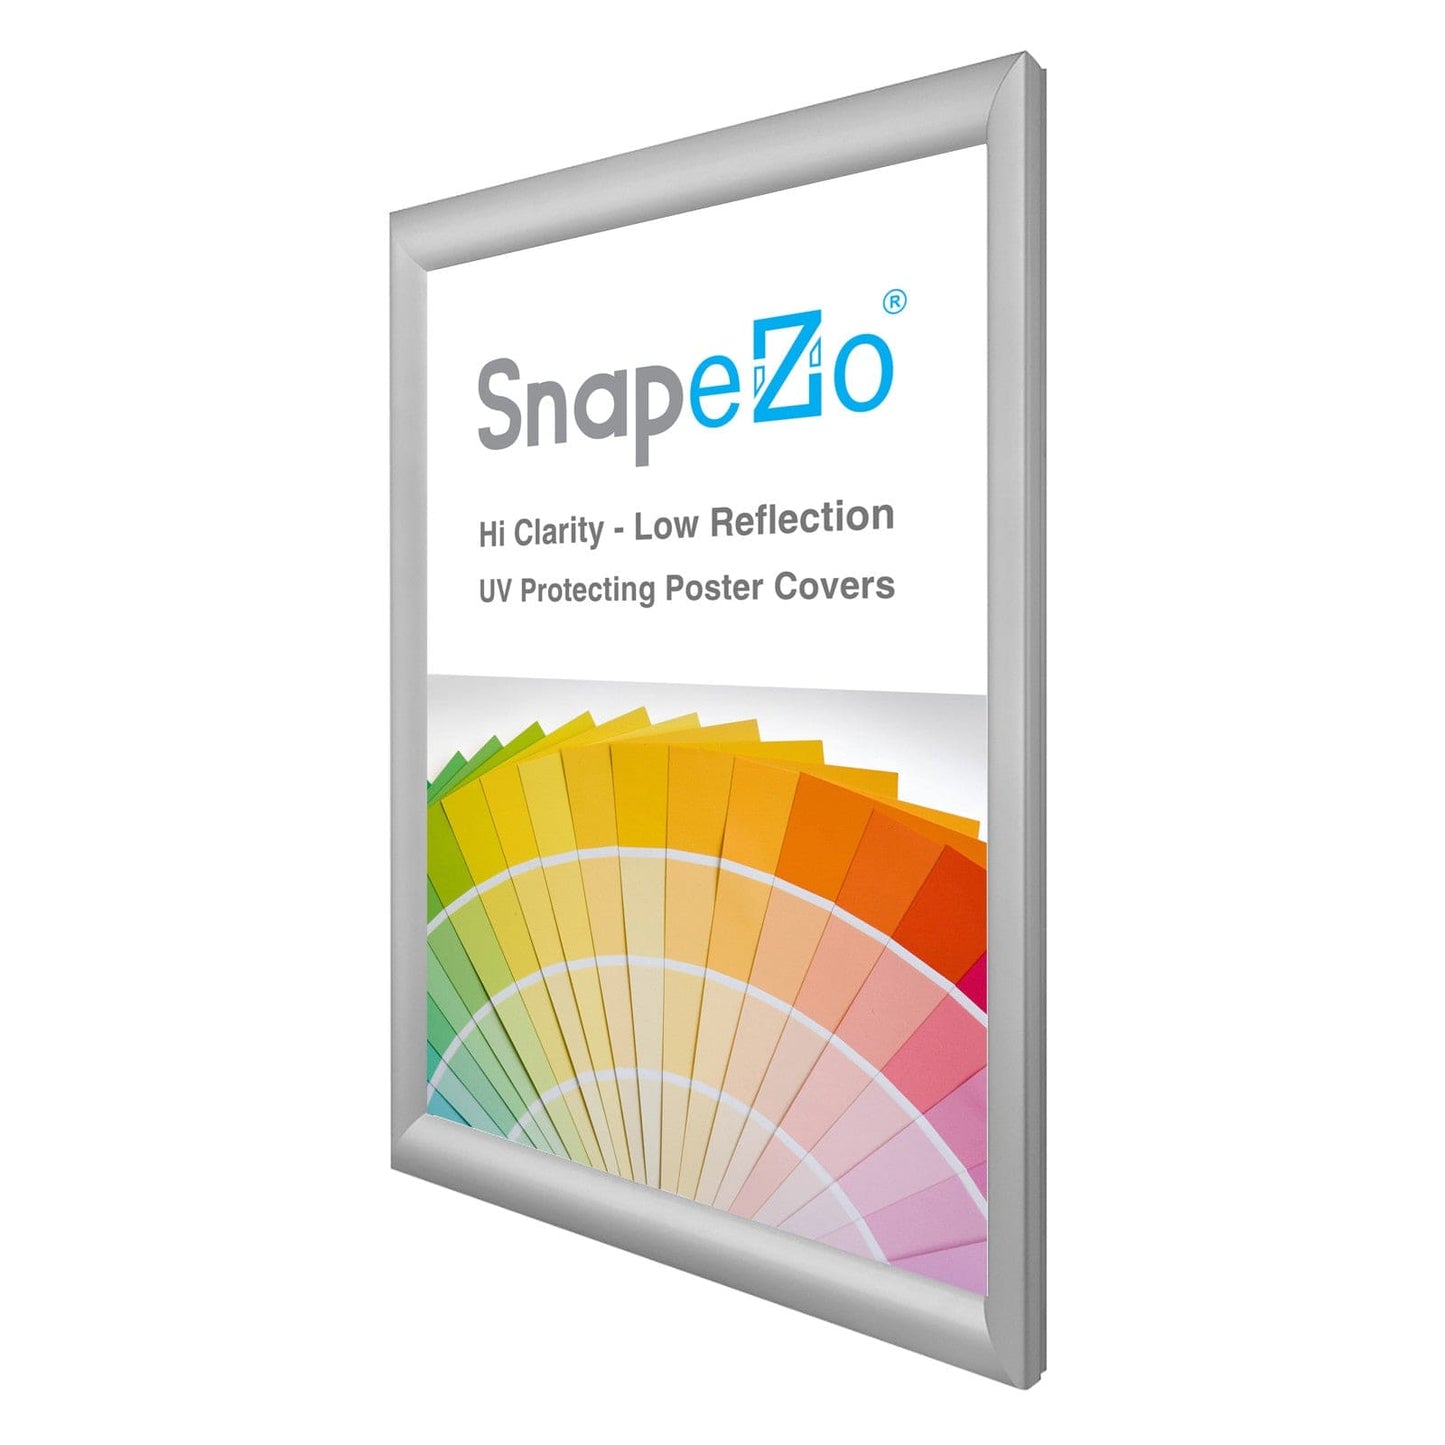 13x19 Silver SnapeZo® Snap Frame - 1.2" Profile - Snap Frames Direct